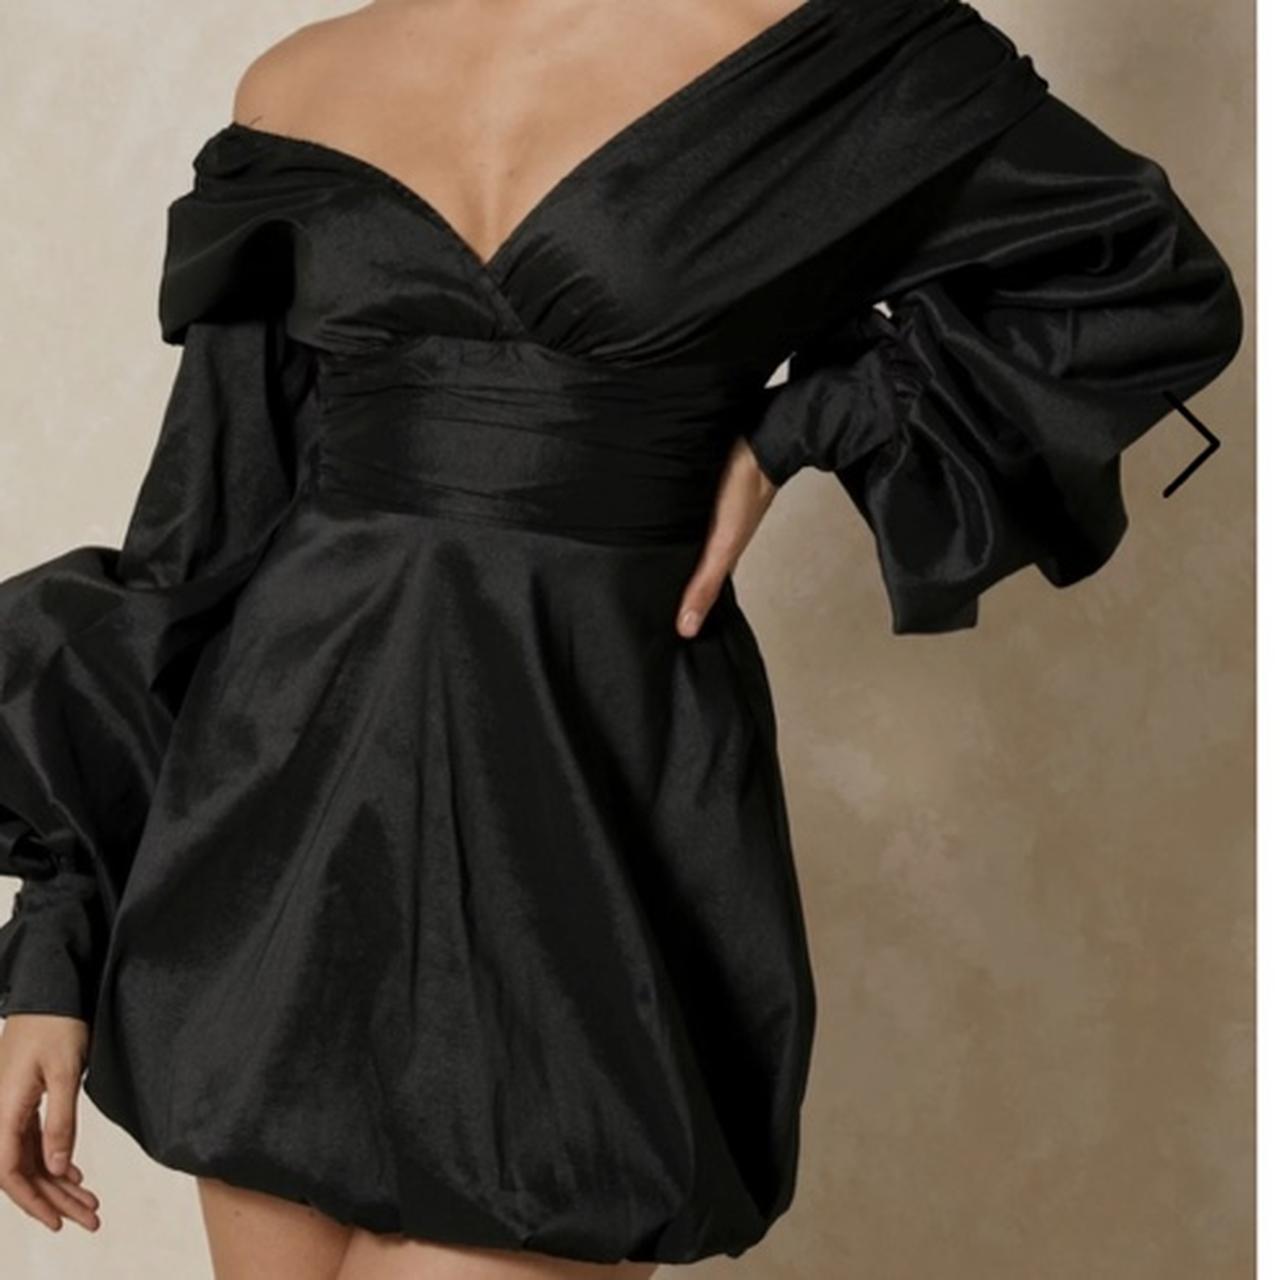 Product Image 2 - Black MISSPAP dress! Worn one